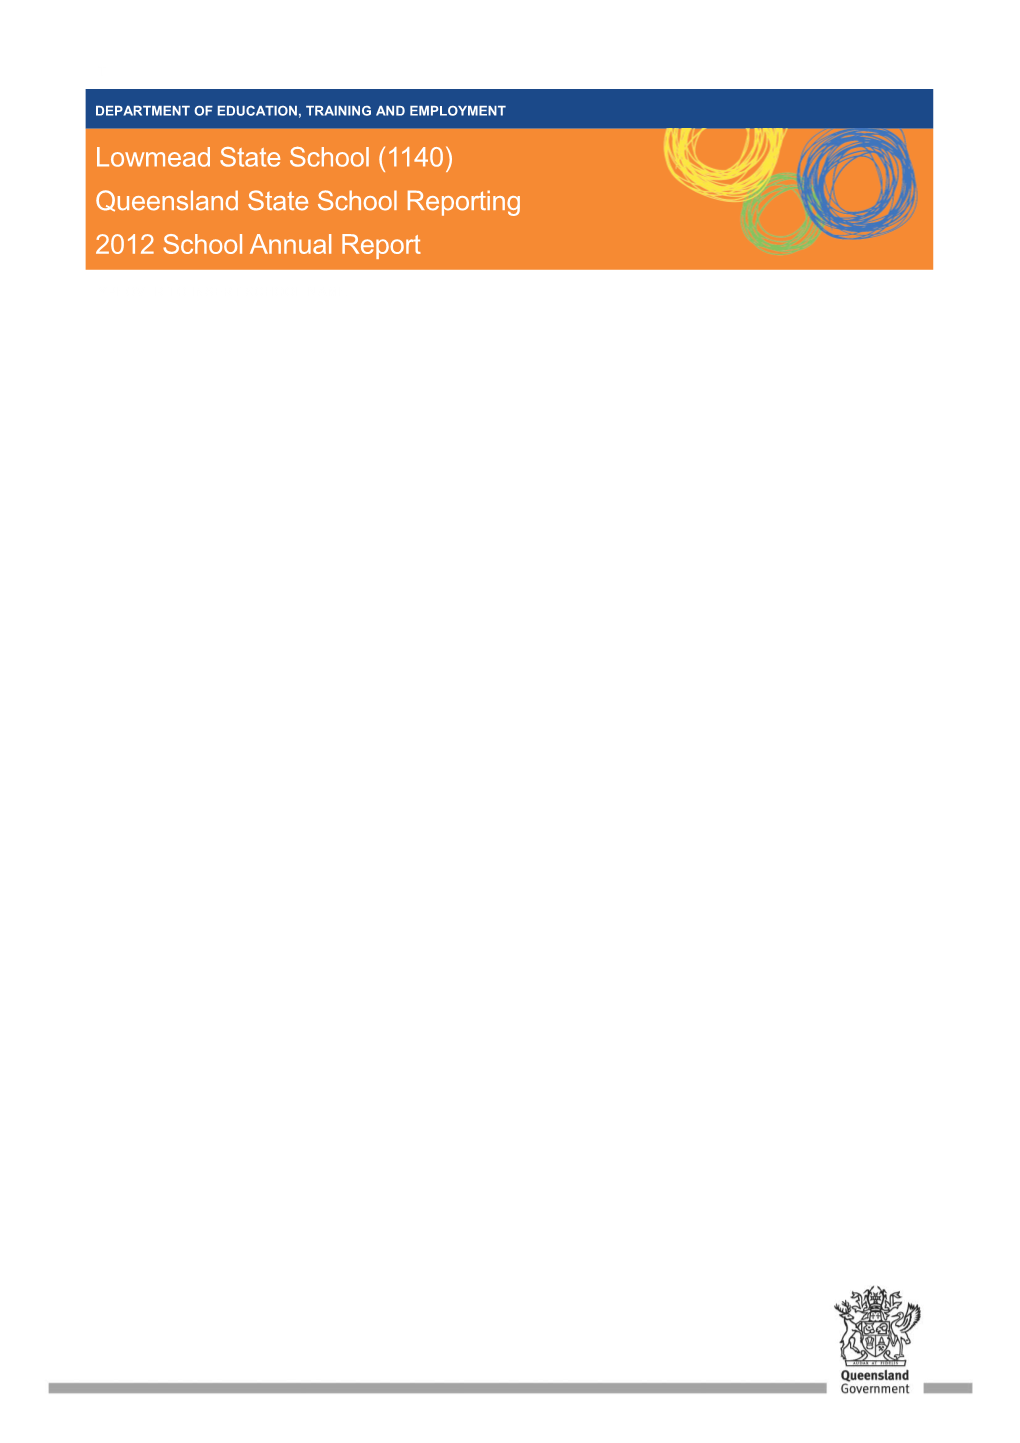 School Annual Report